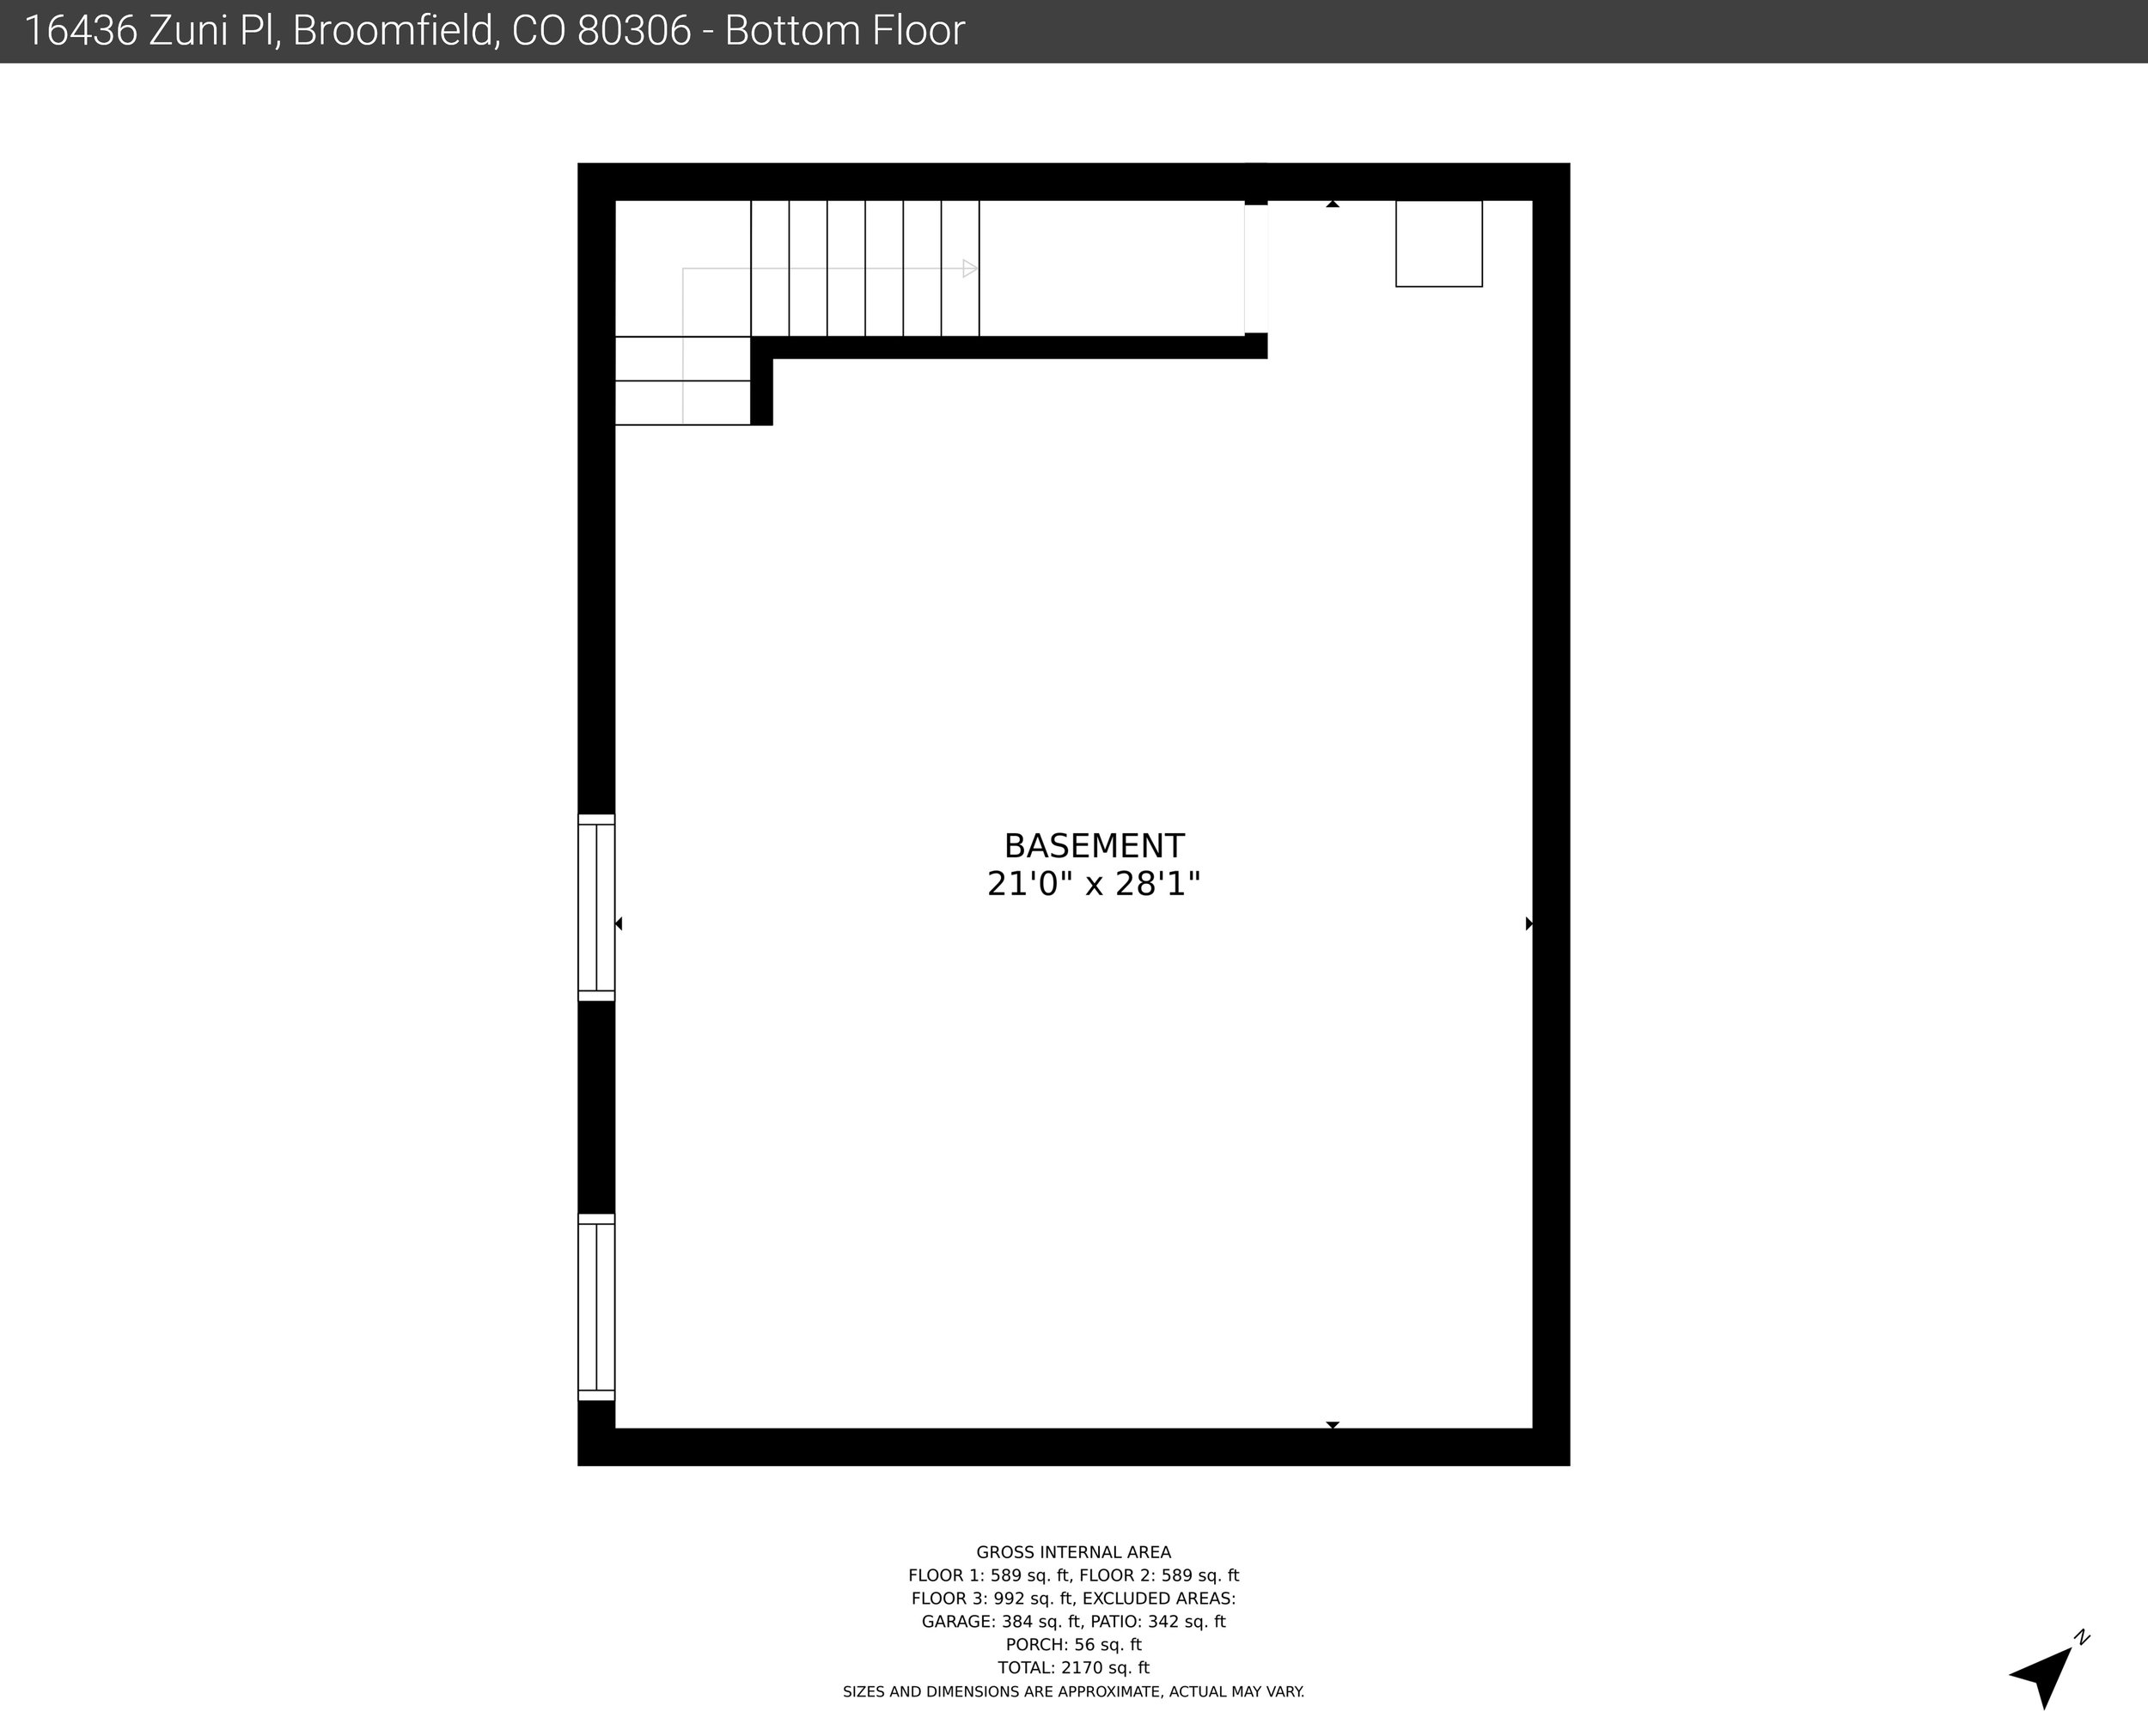 floor plan basement.jpg